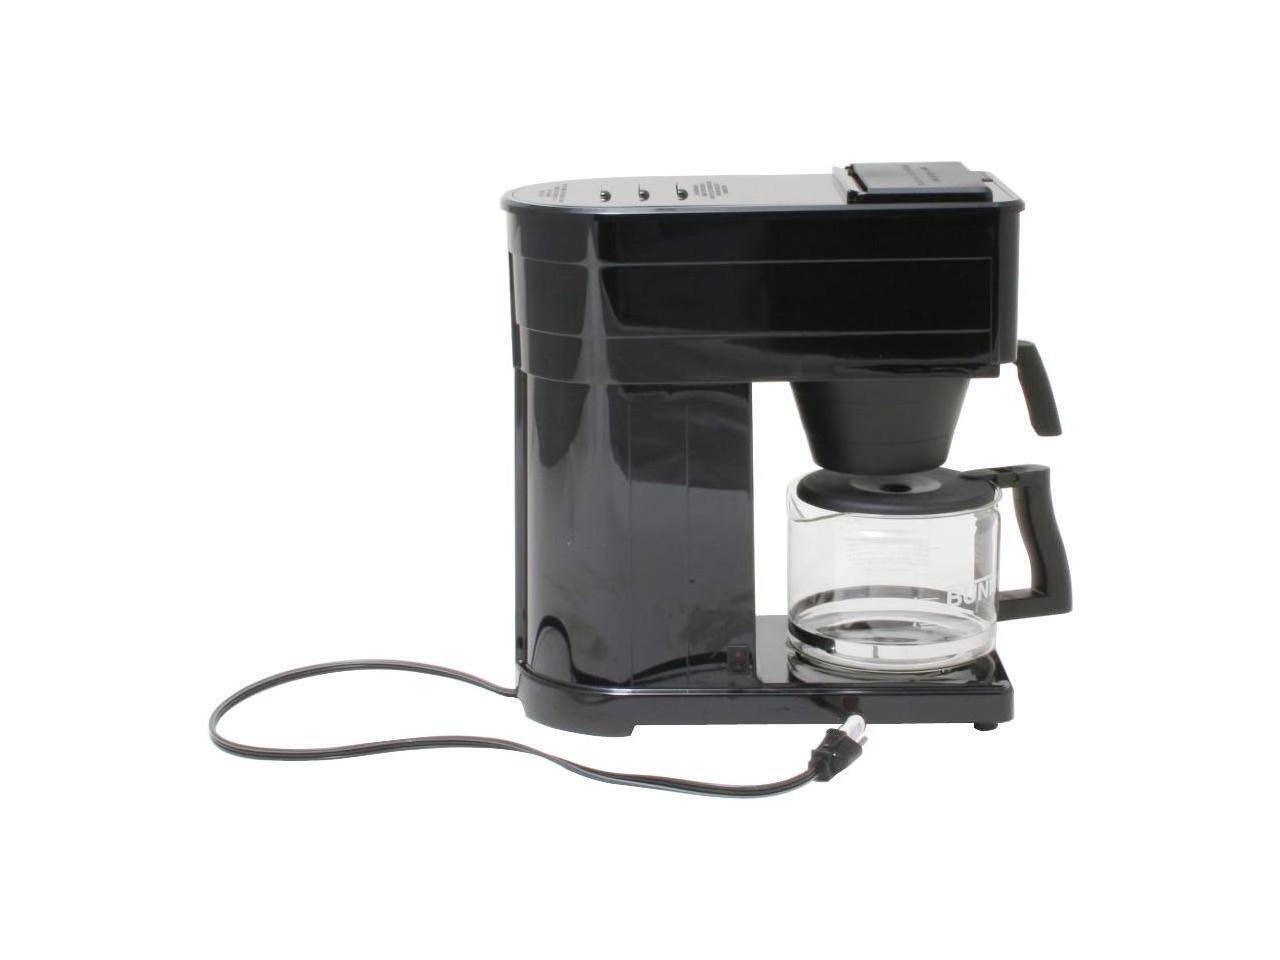 Hamilton Beach 16 Oz. Convenient Craft Rapid Cold Brew and Hot Coffee Maker  - 42501